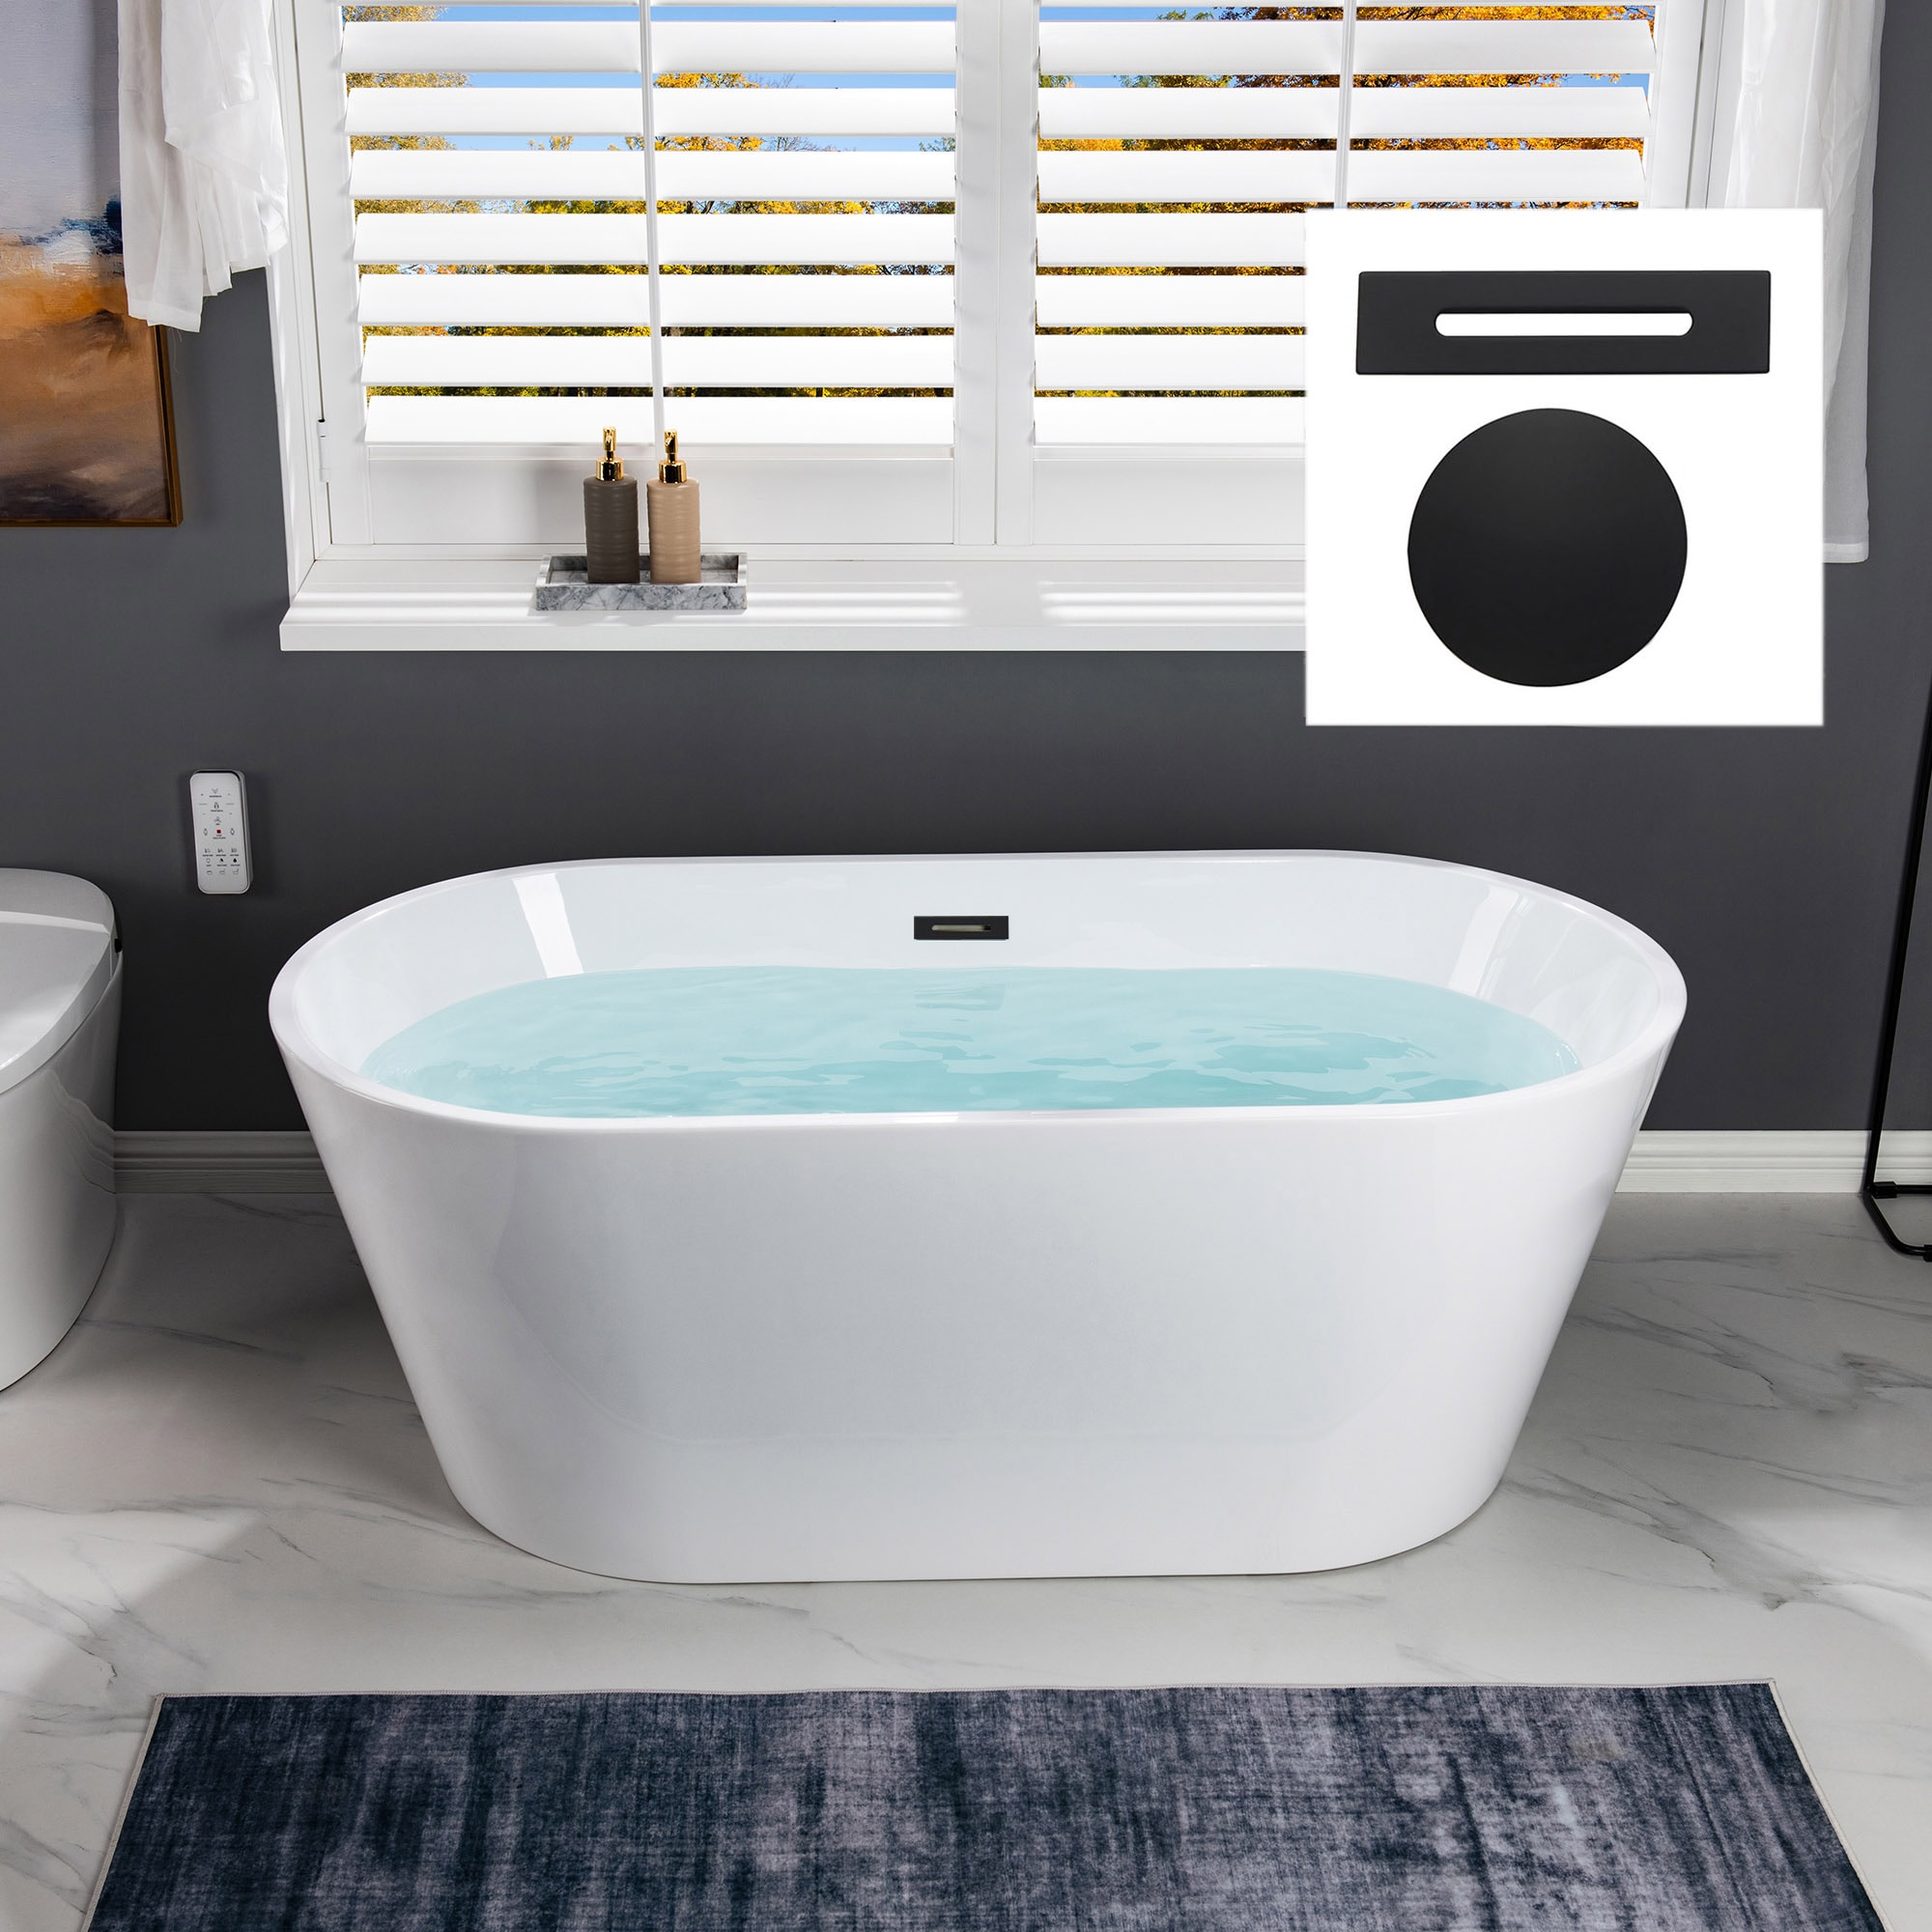 056.Flex bathtub-overflow with plastic adapter